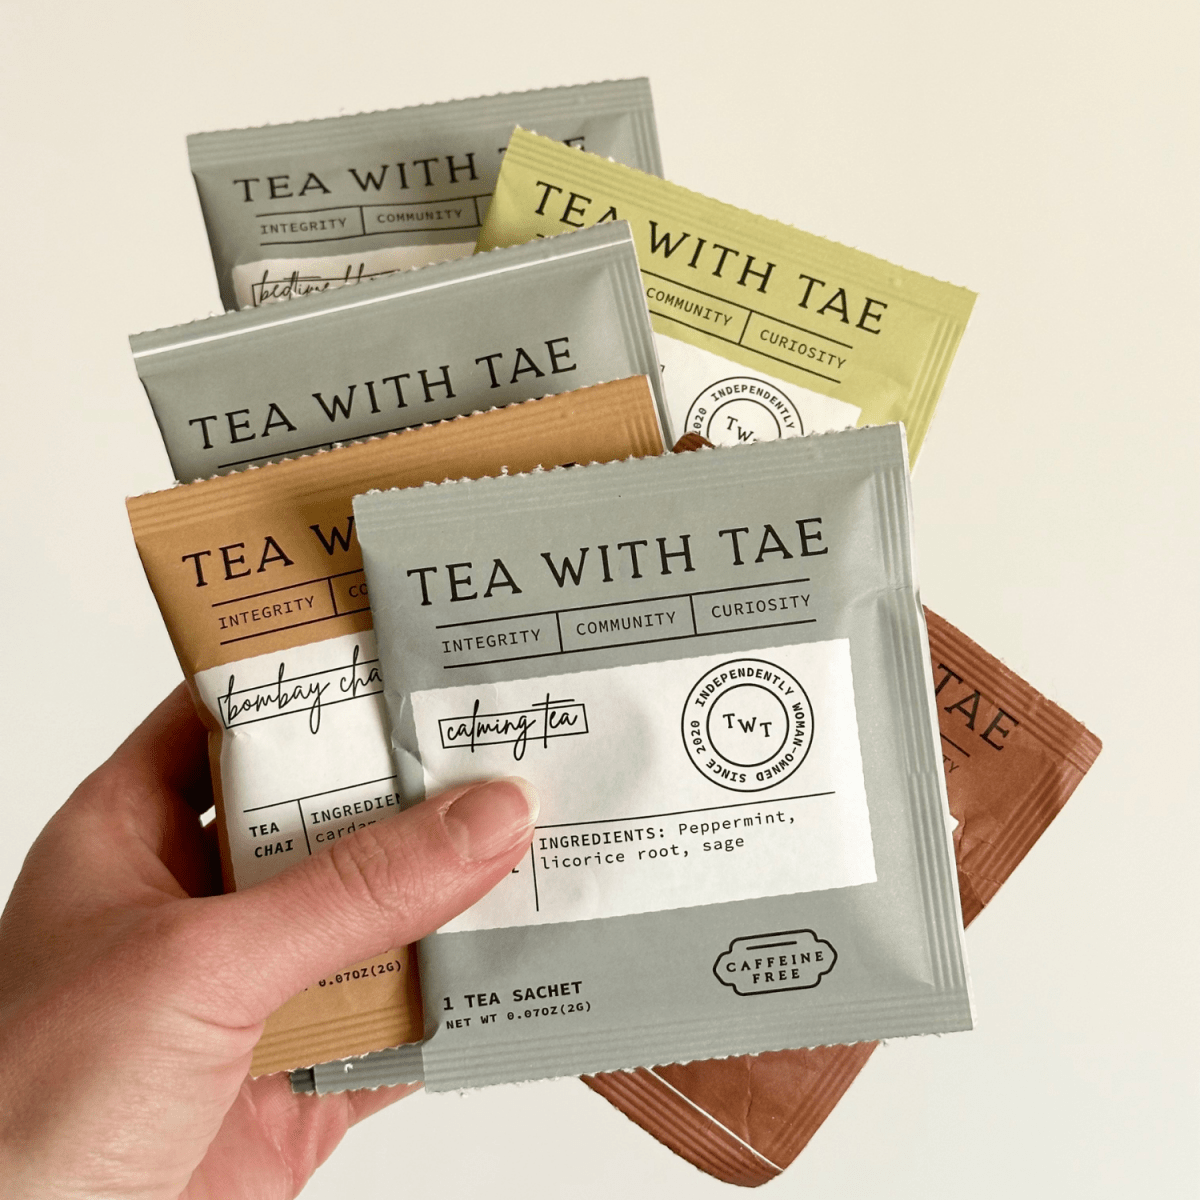 7-Days of Tea Sampler Pack - Tea with Tae